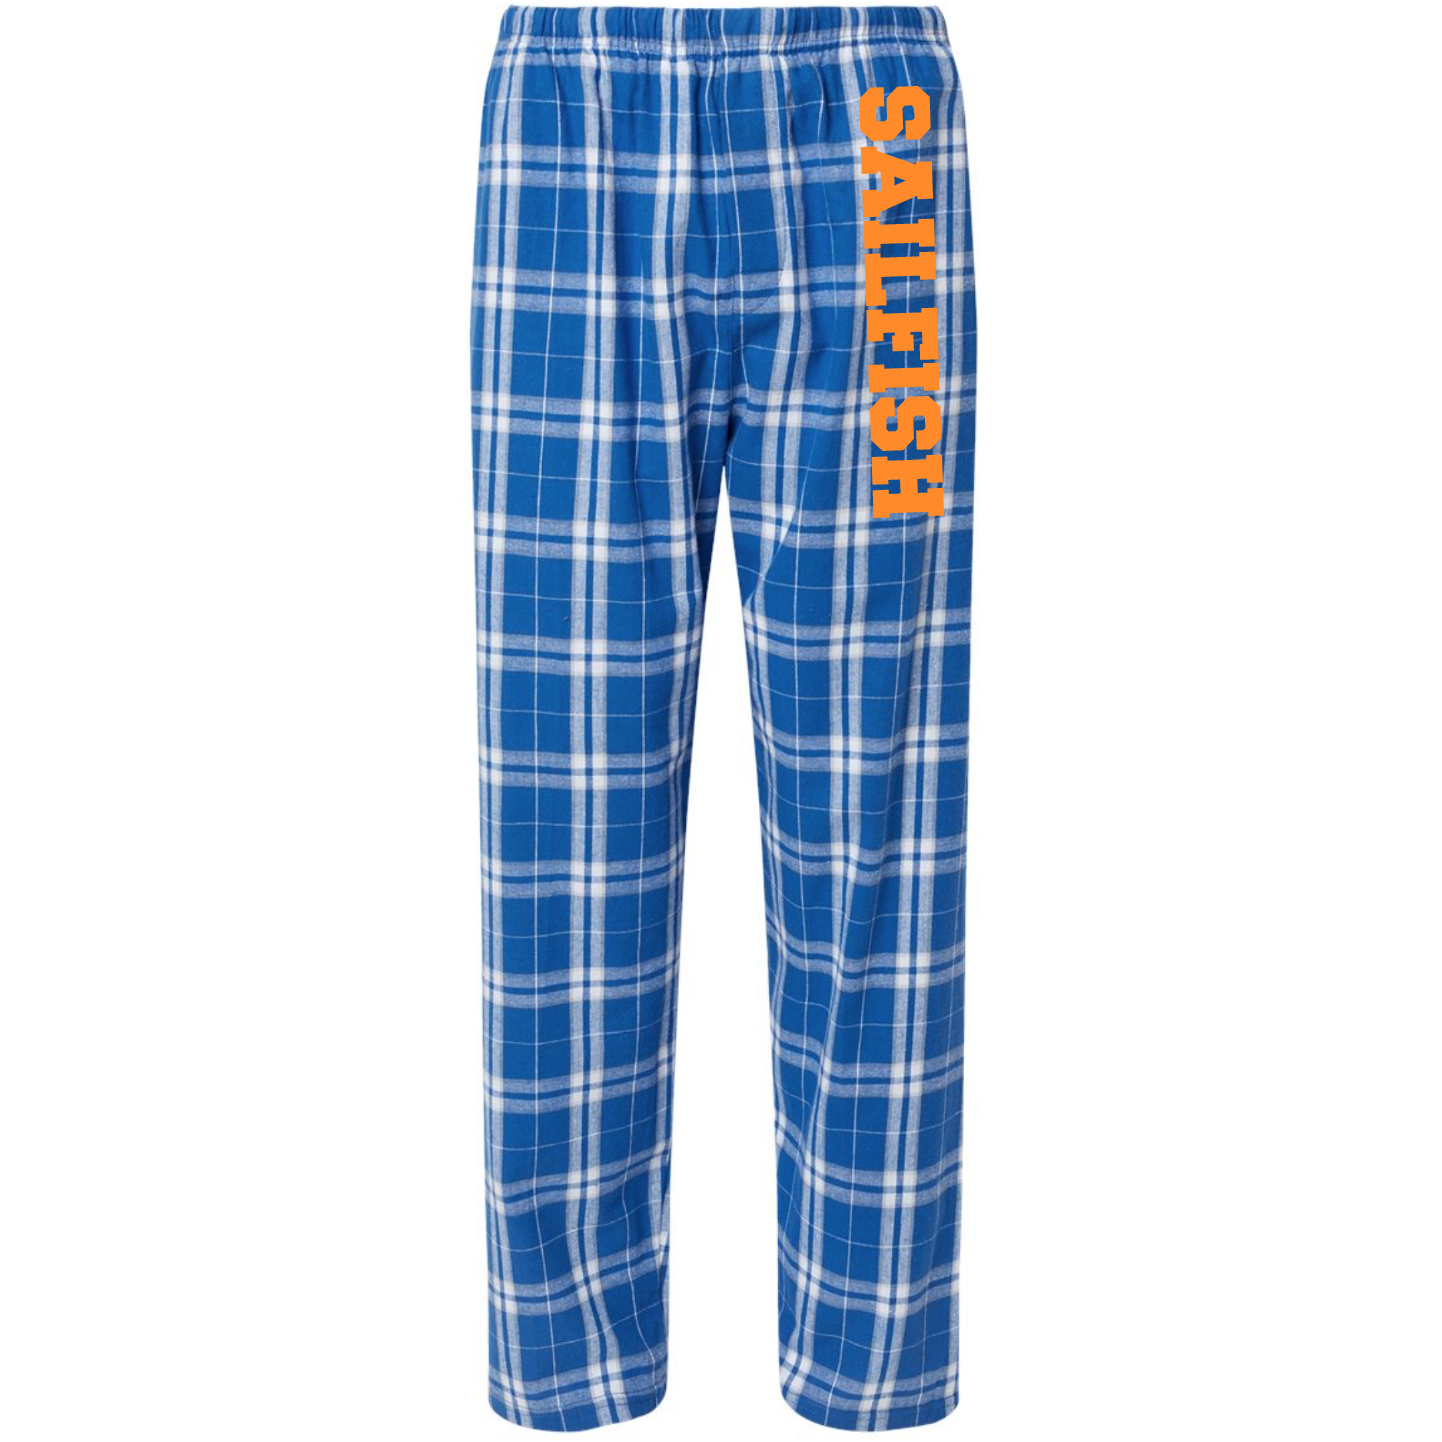 Boxercraft Flannel Pants (Customized) - Sailfish